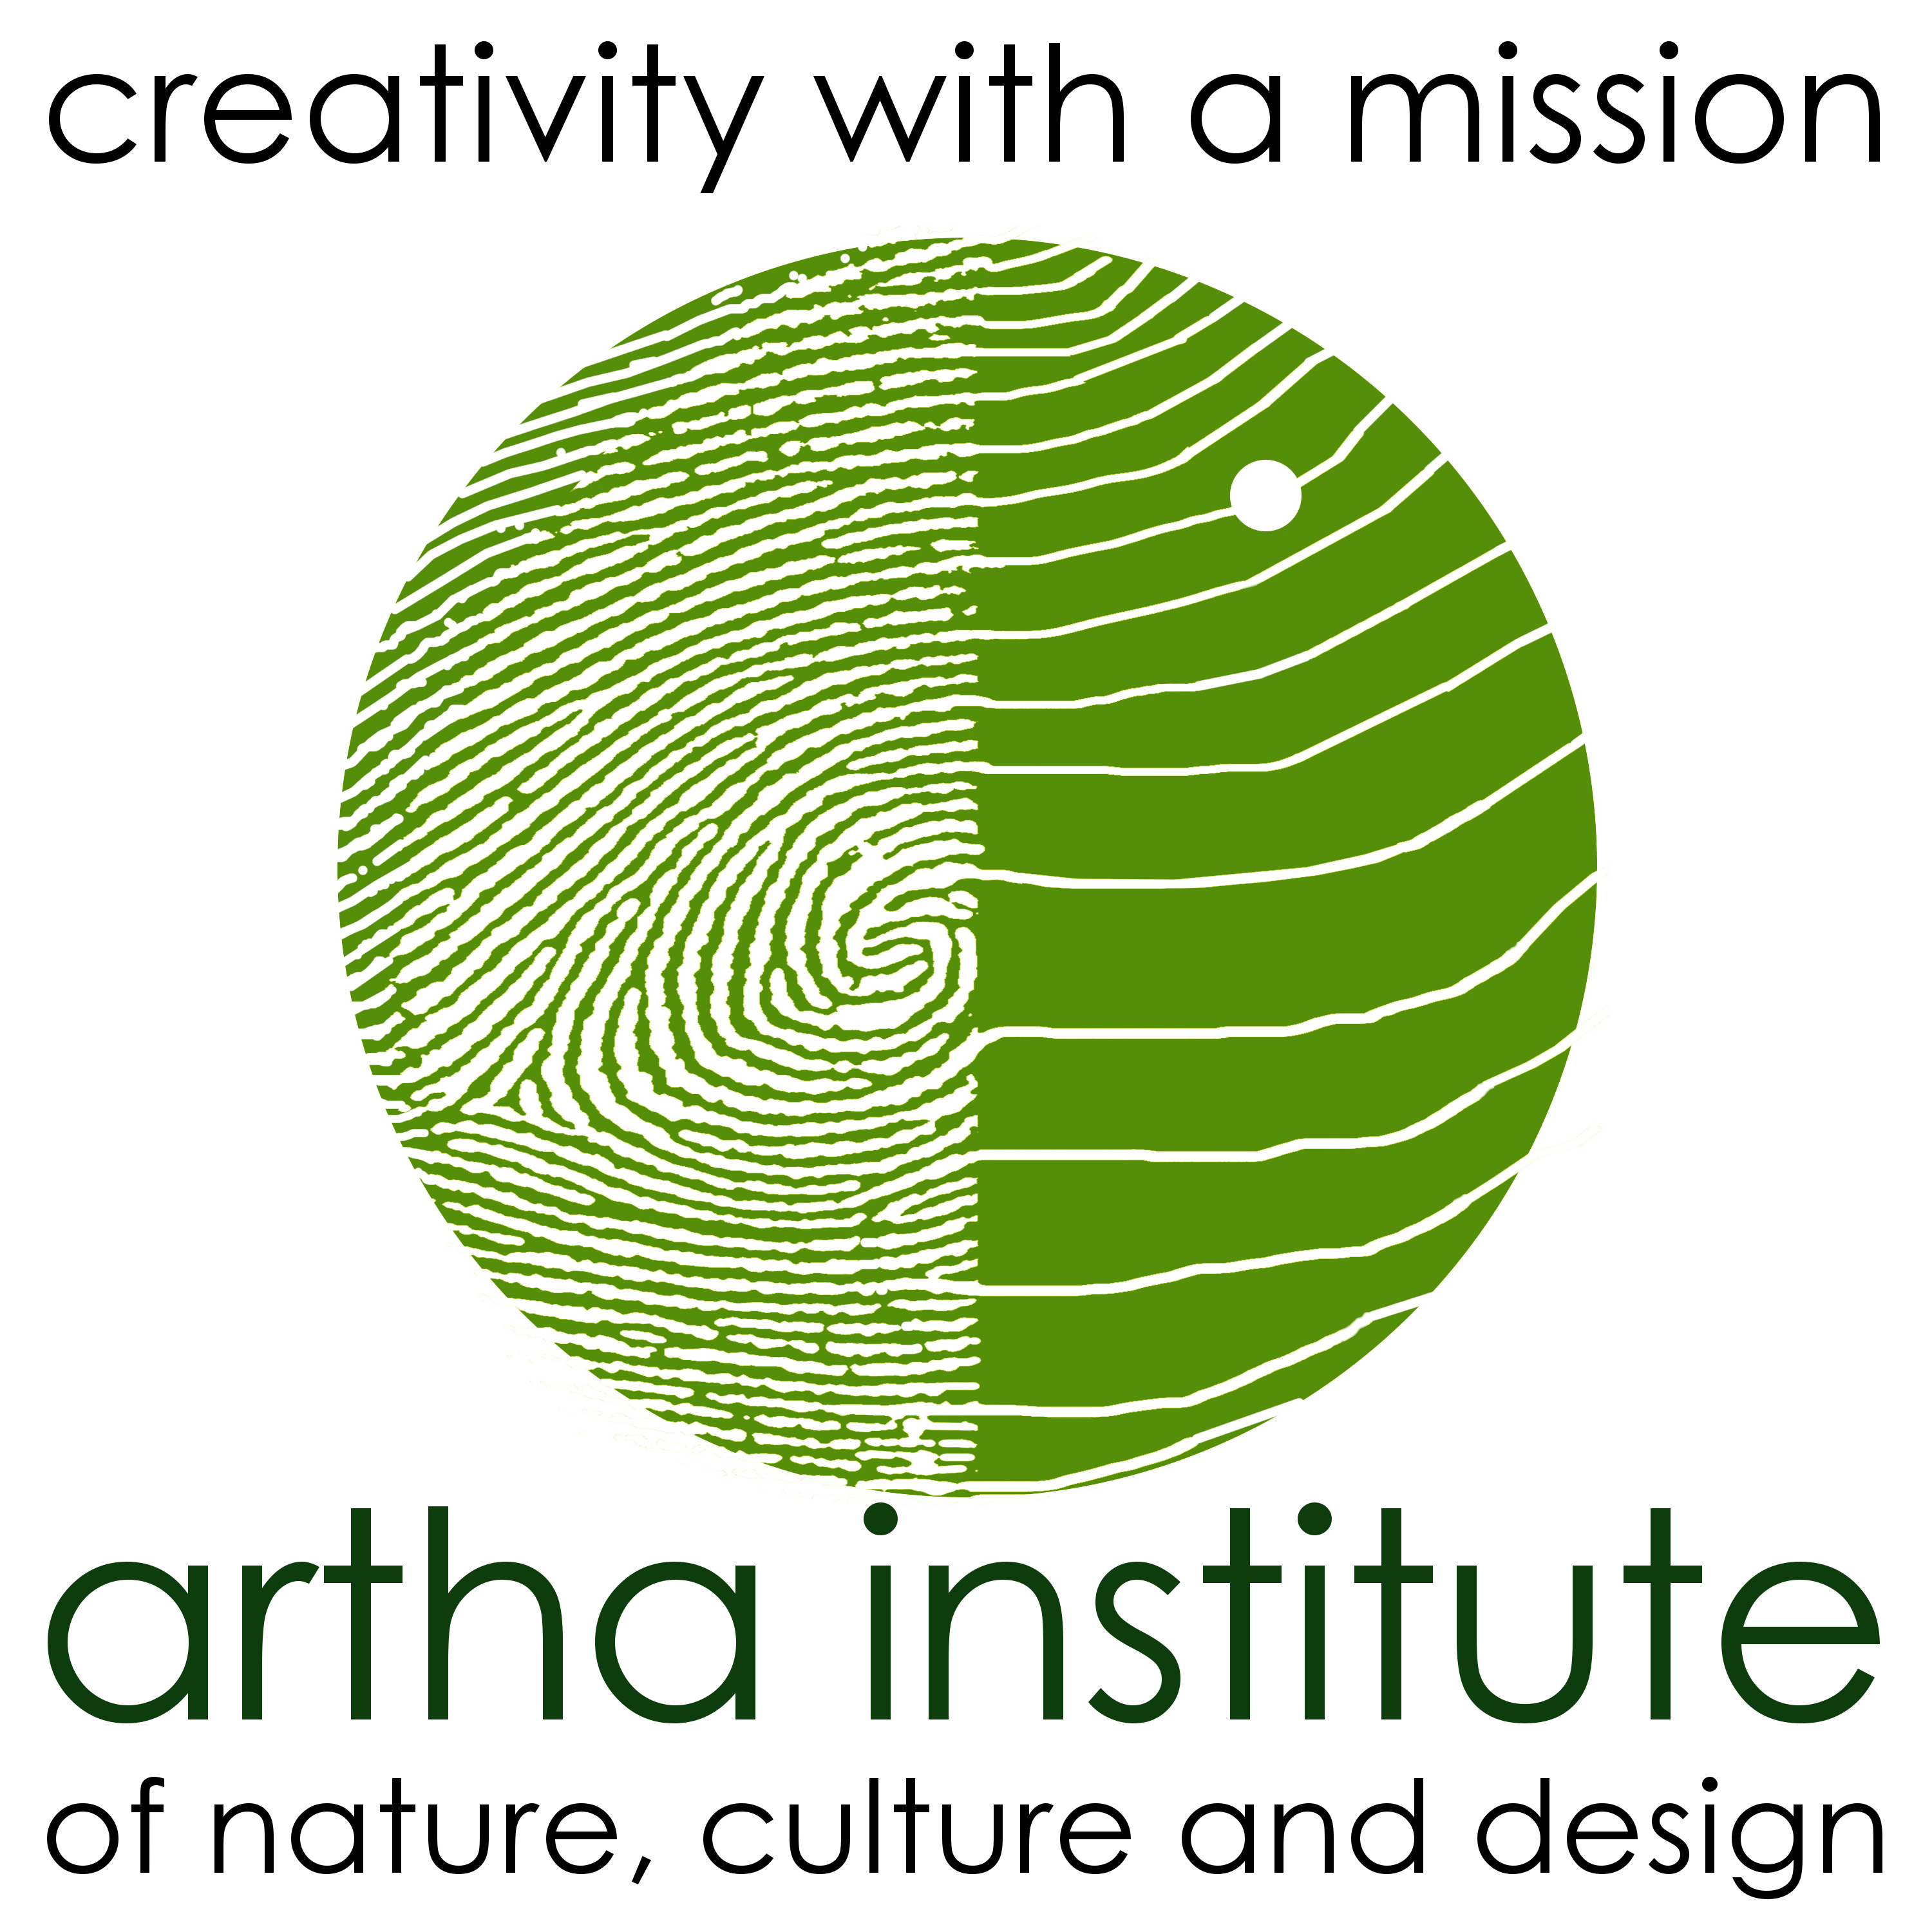 The Artha Institute